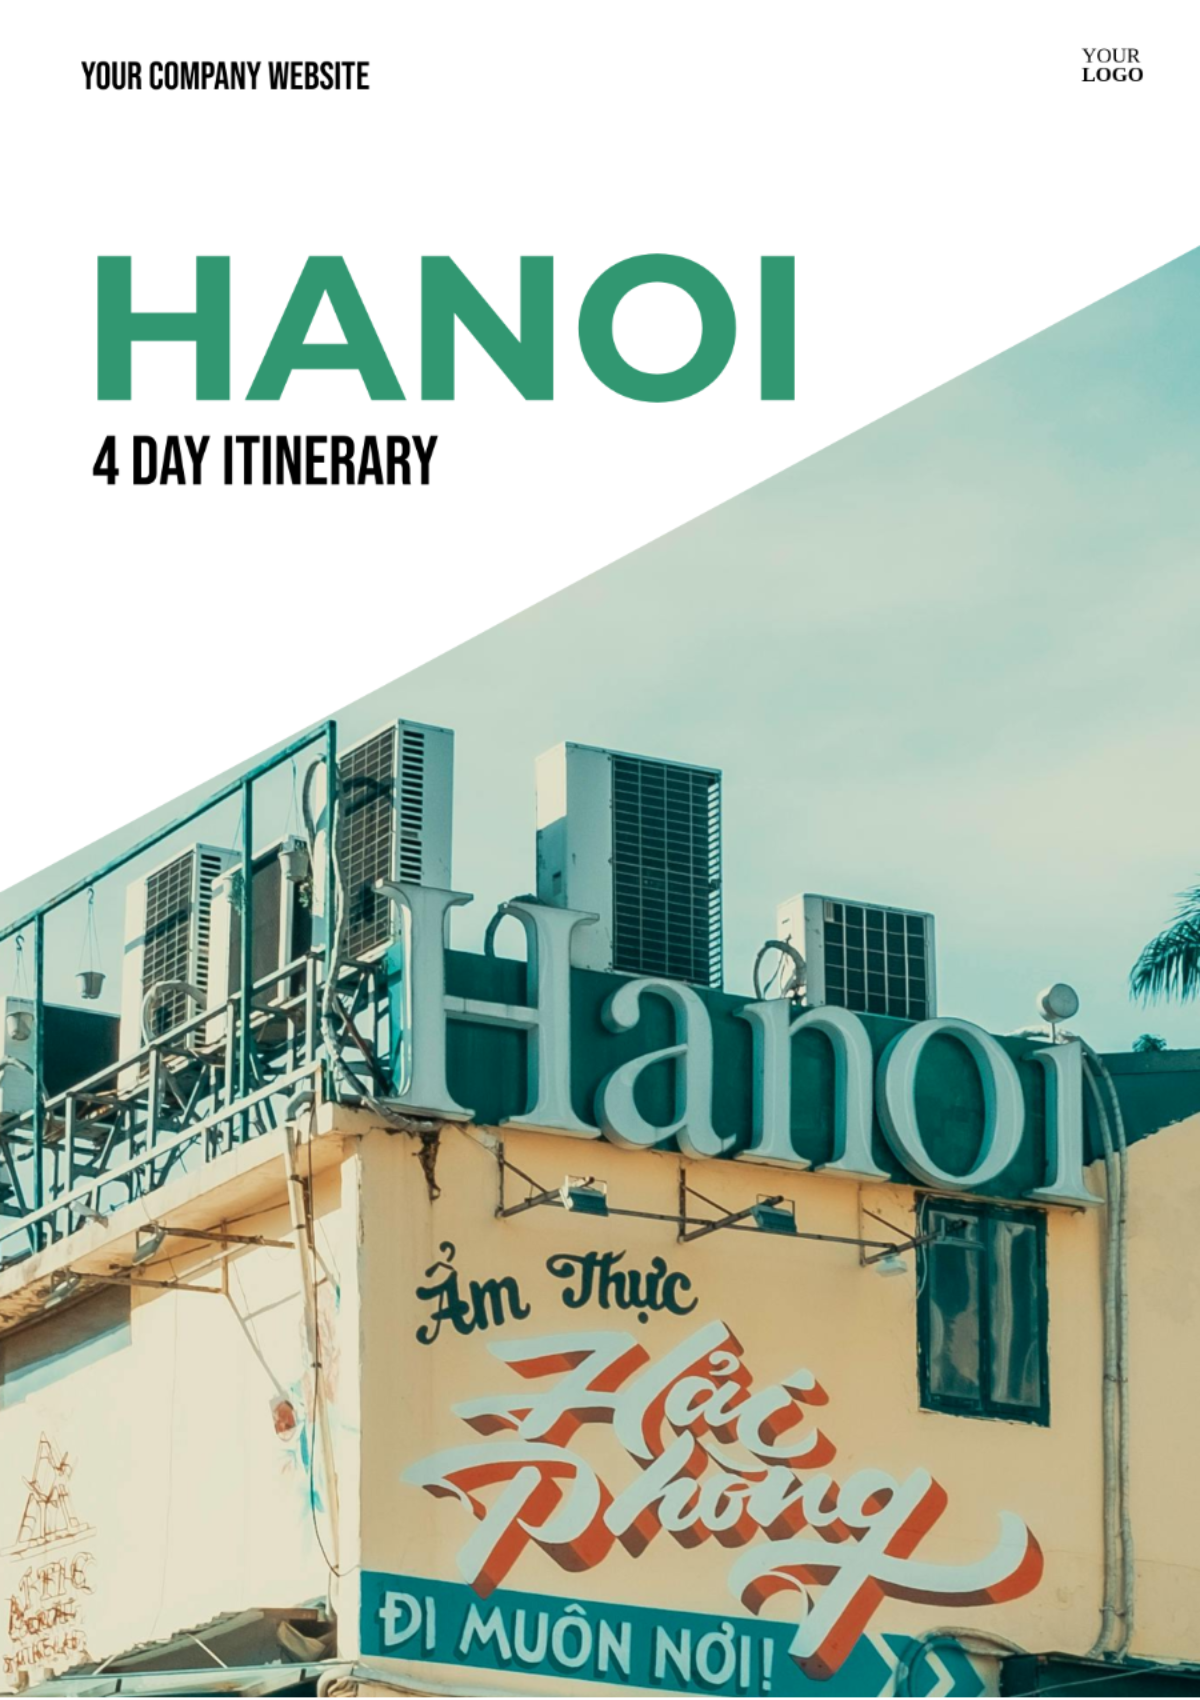 Free 4 Day Hanoi Itinerary Template